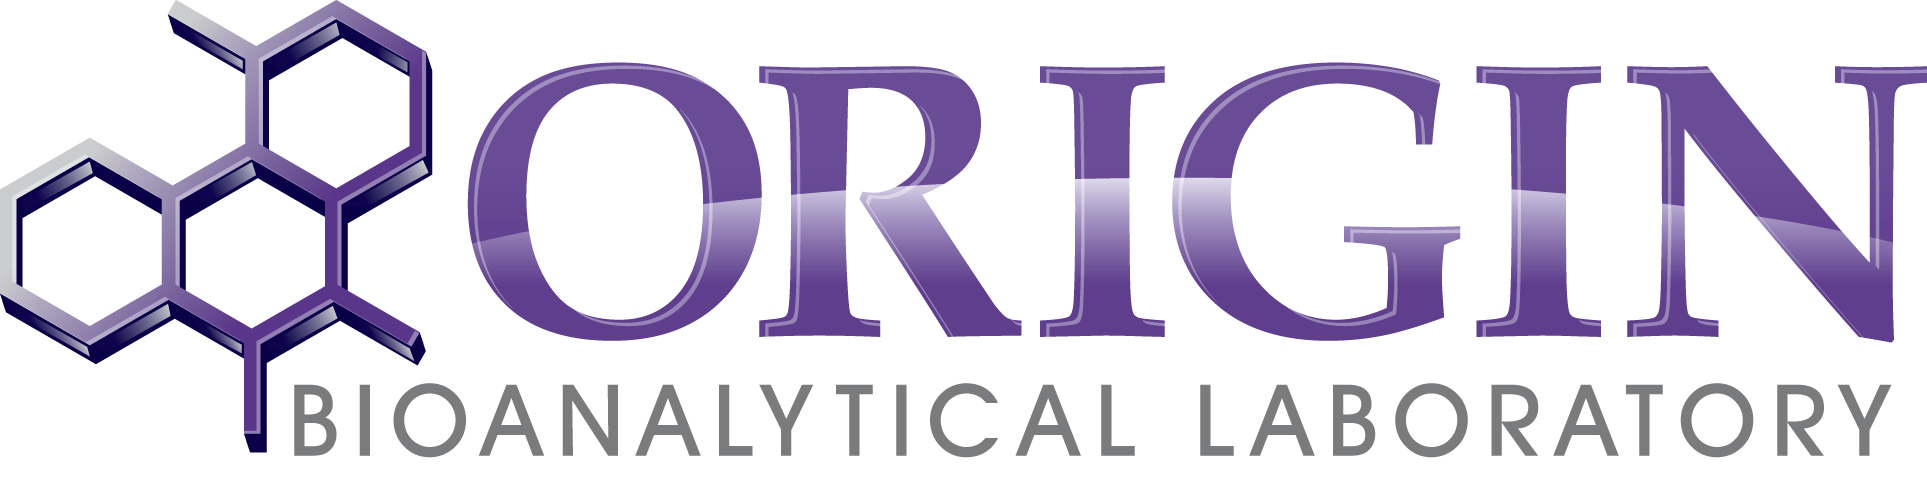 Contract Research Organization | Origin Bioanalytical Laboratory, Inc.